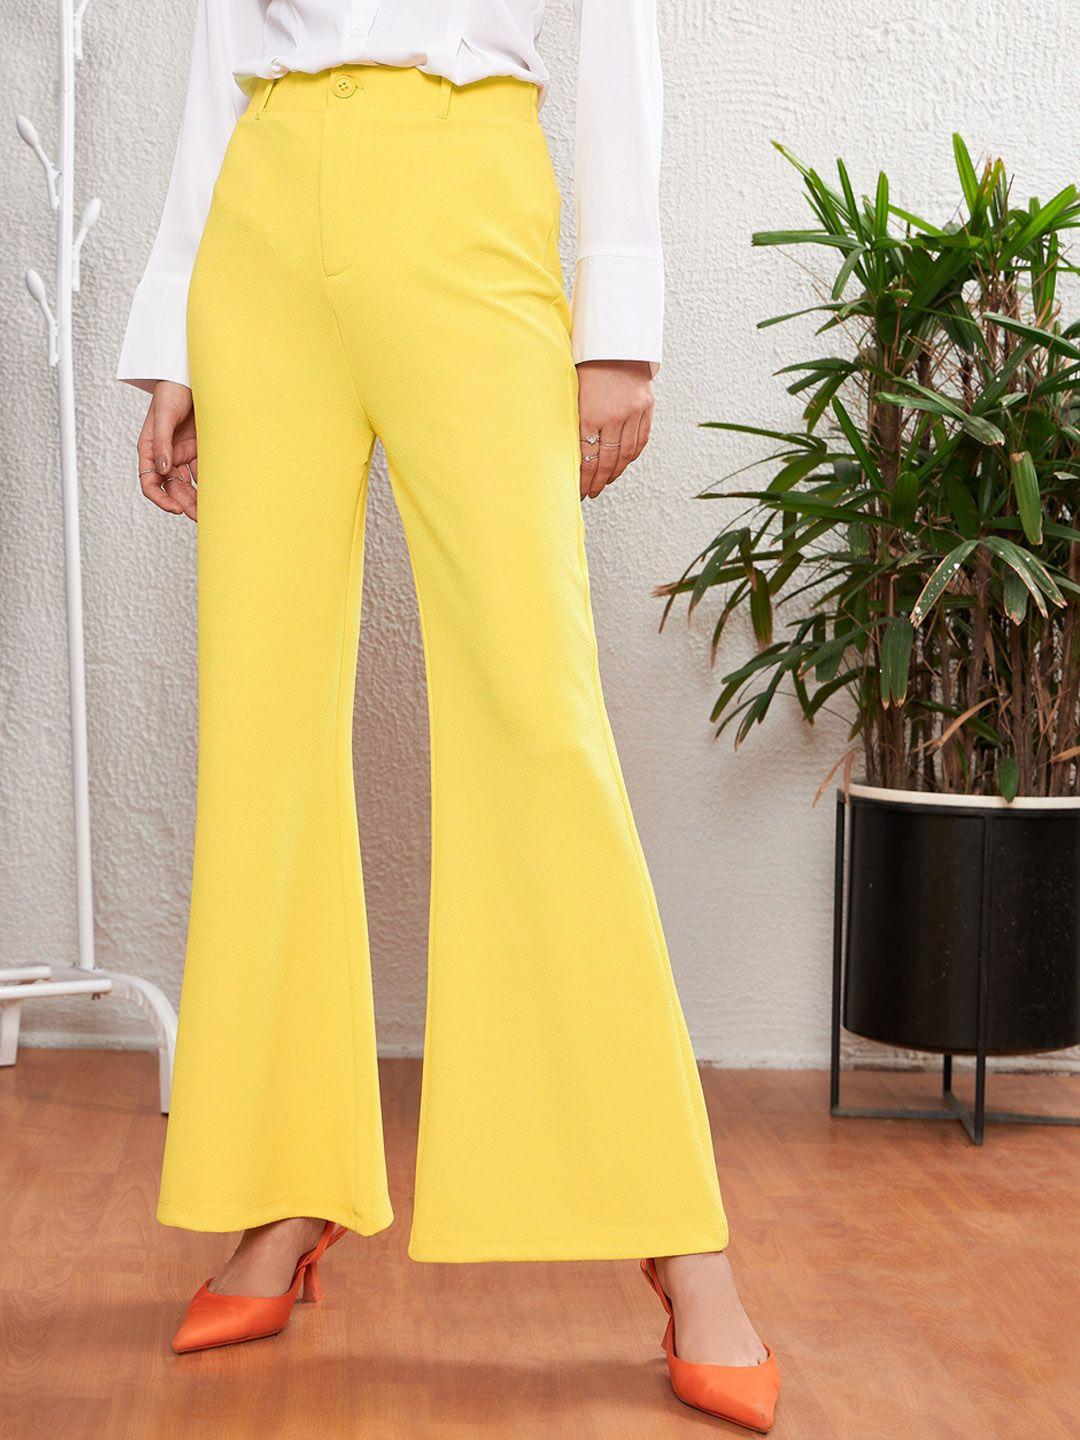 sassafras worklyf women yellow flared high-rise easy wash trousers